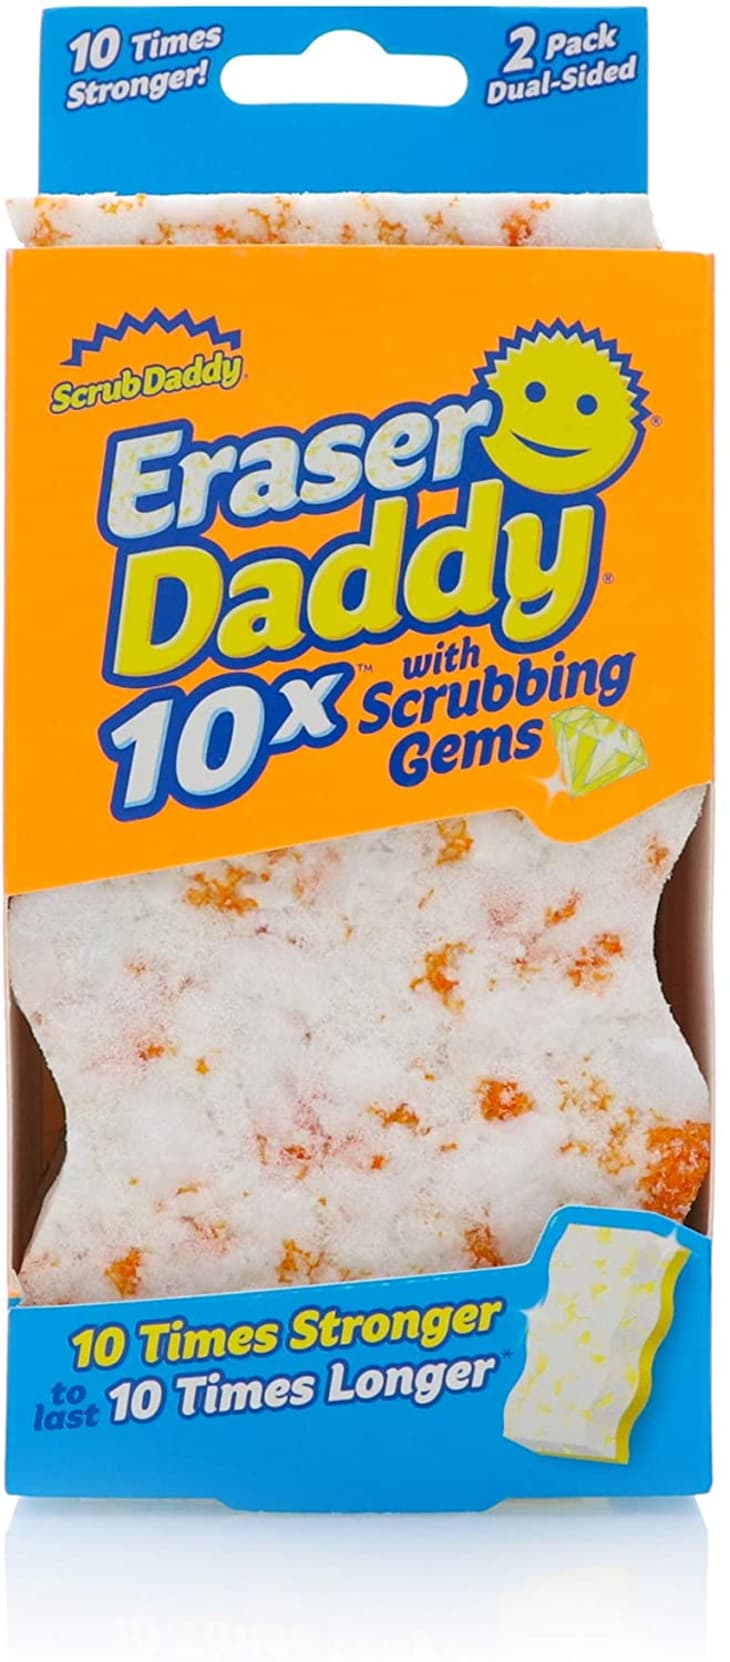 Scrub Daddy Eraser Sponge at Amazon